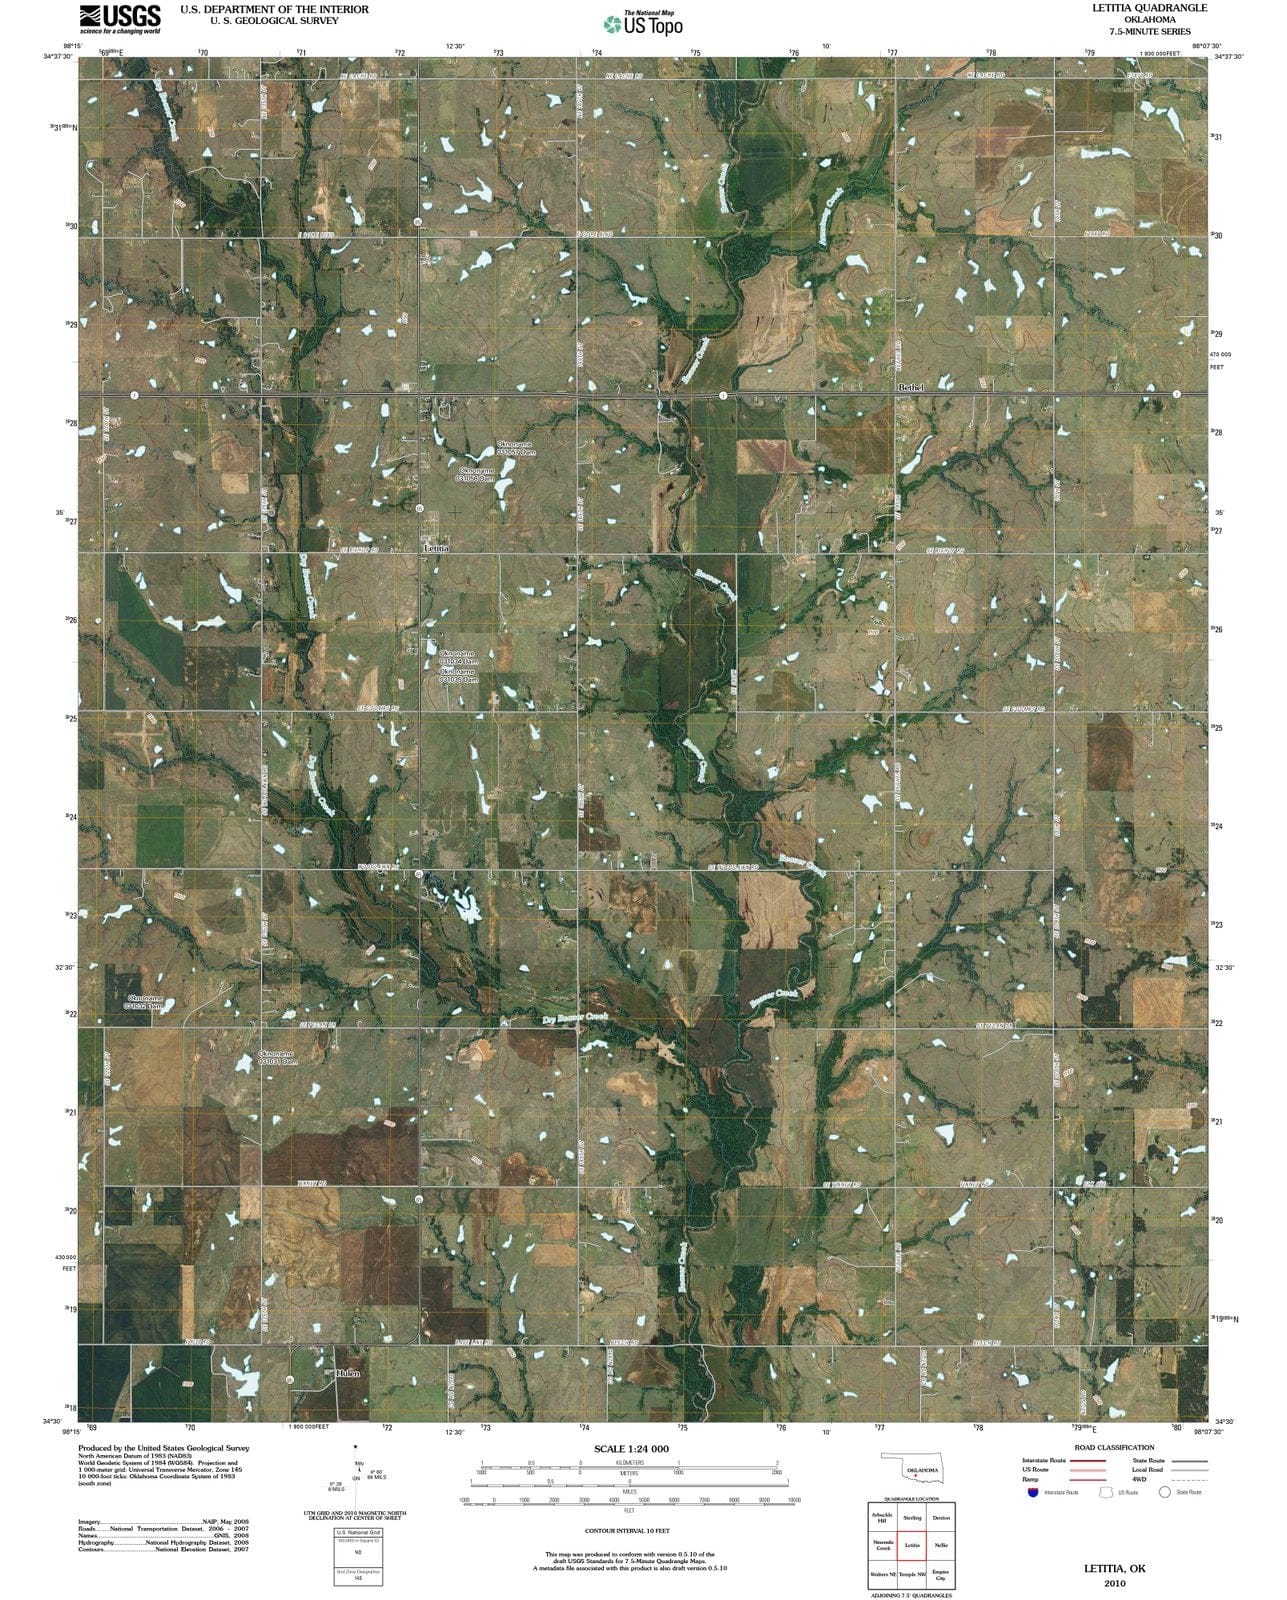 2010 Letitia, OK - Oklahoma - USGS Topographic Map